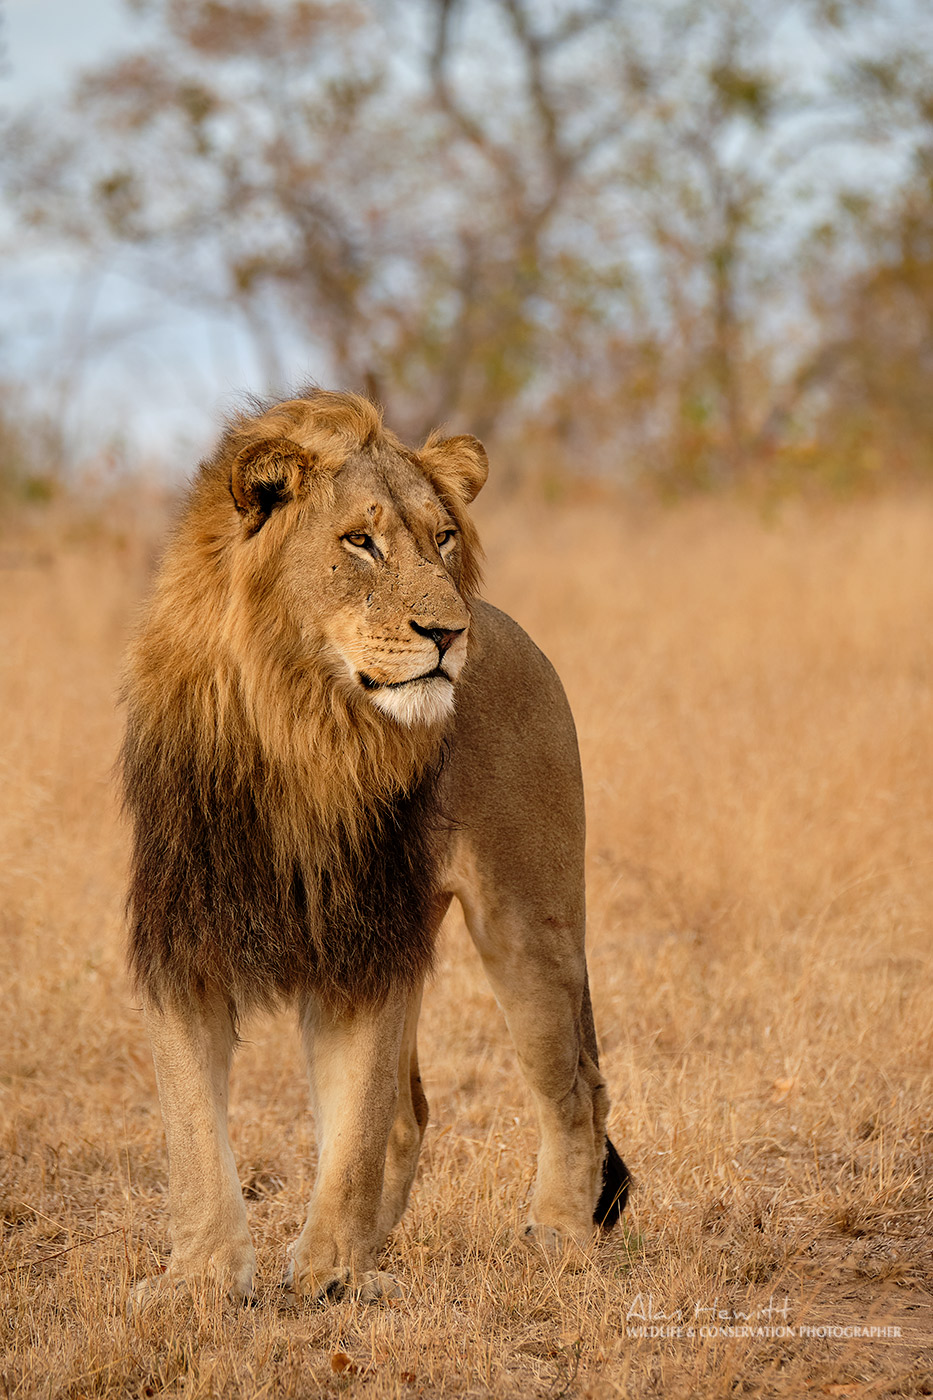 Male Lion Alan Hewitt Photography